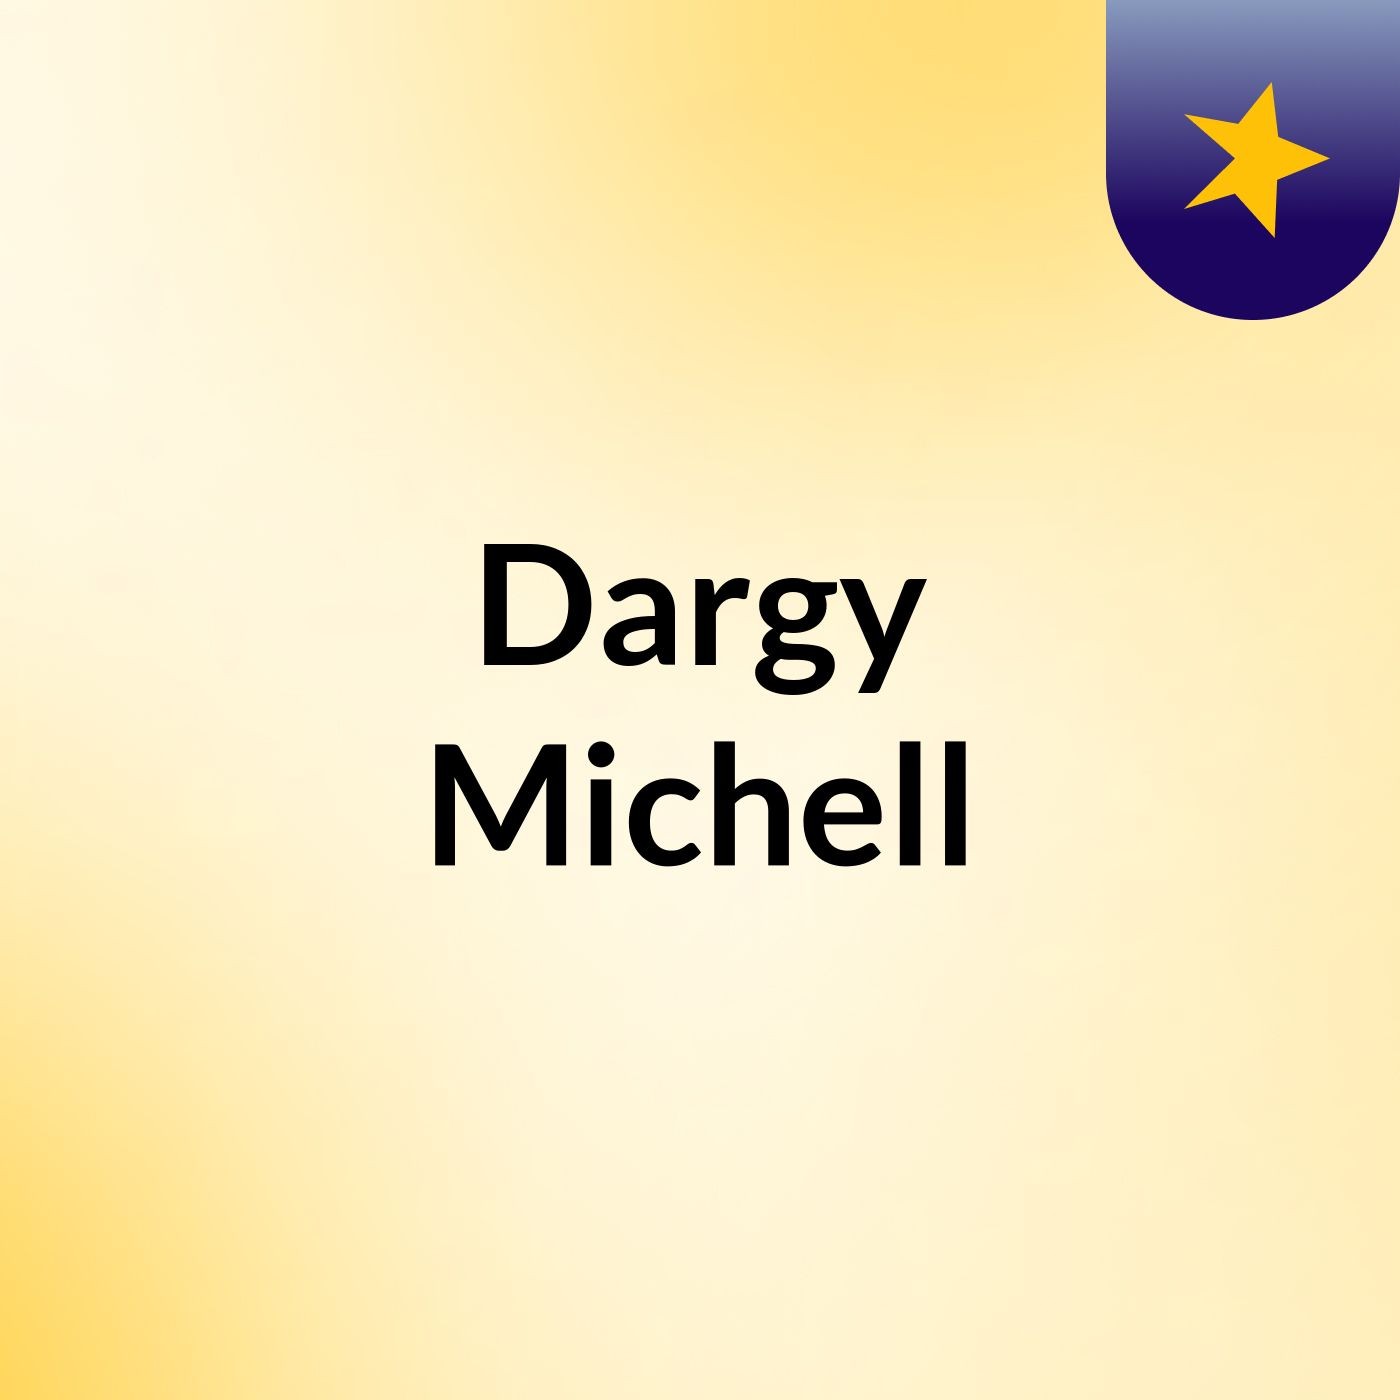 Dargy Michell